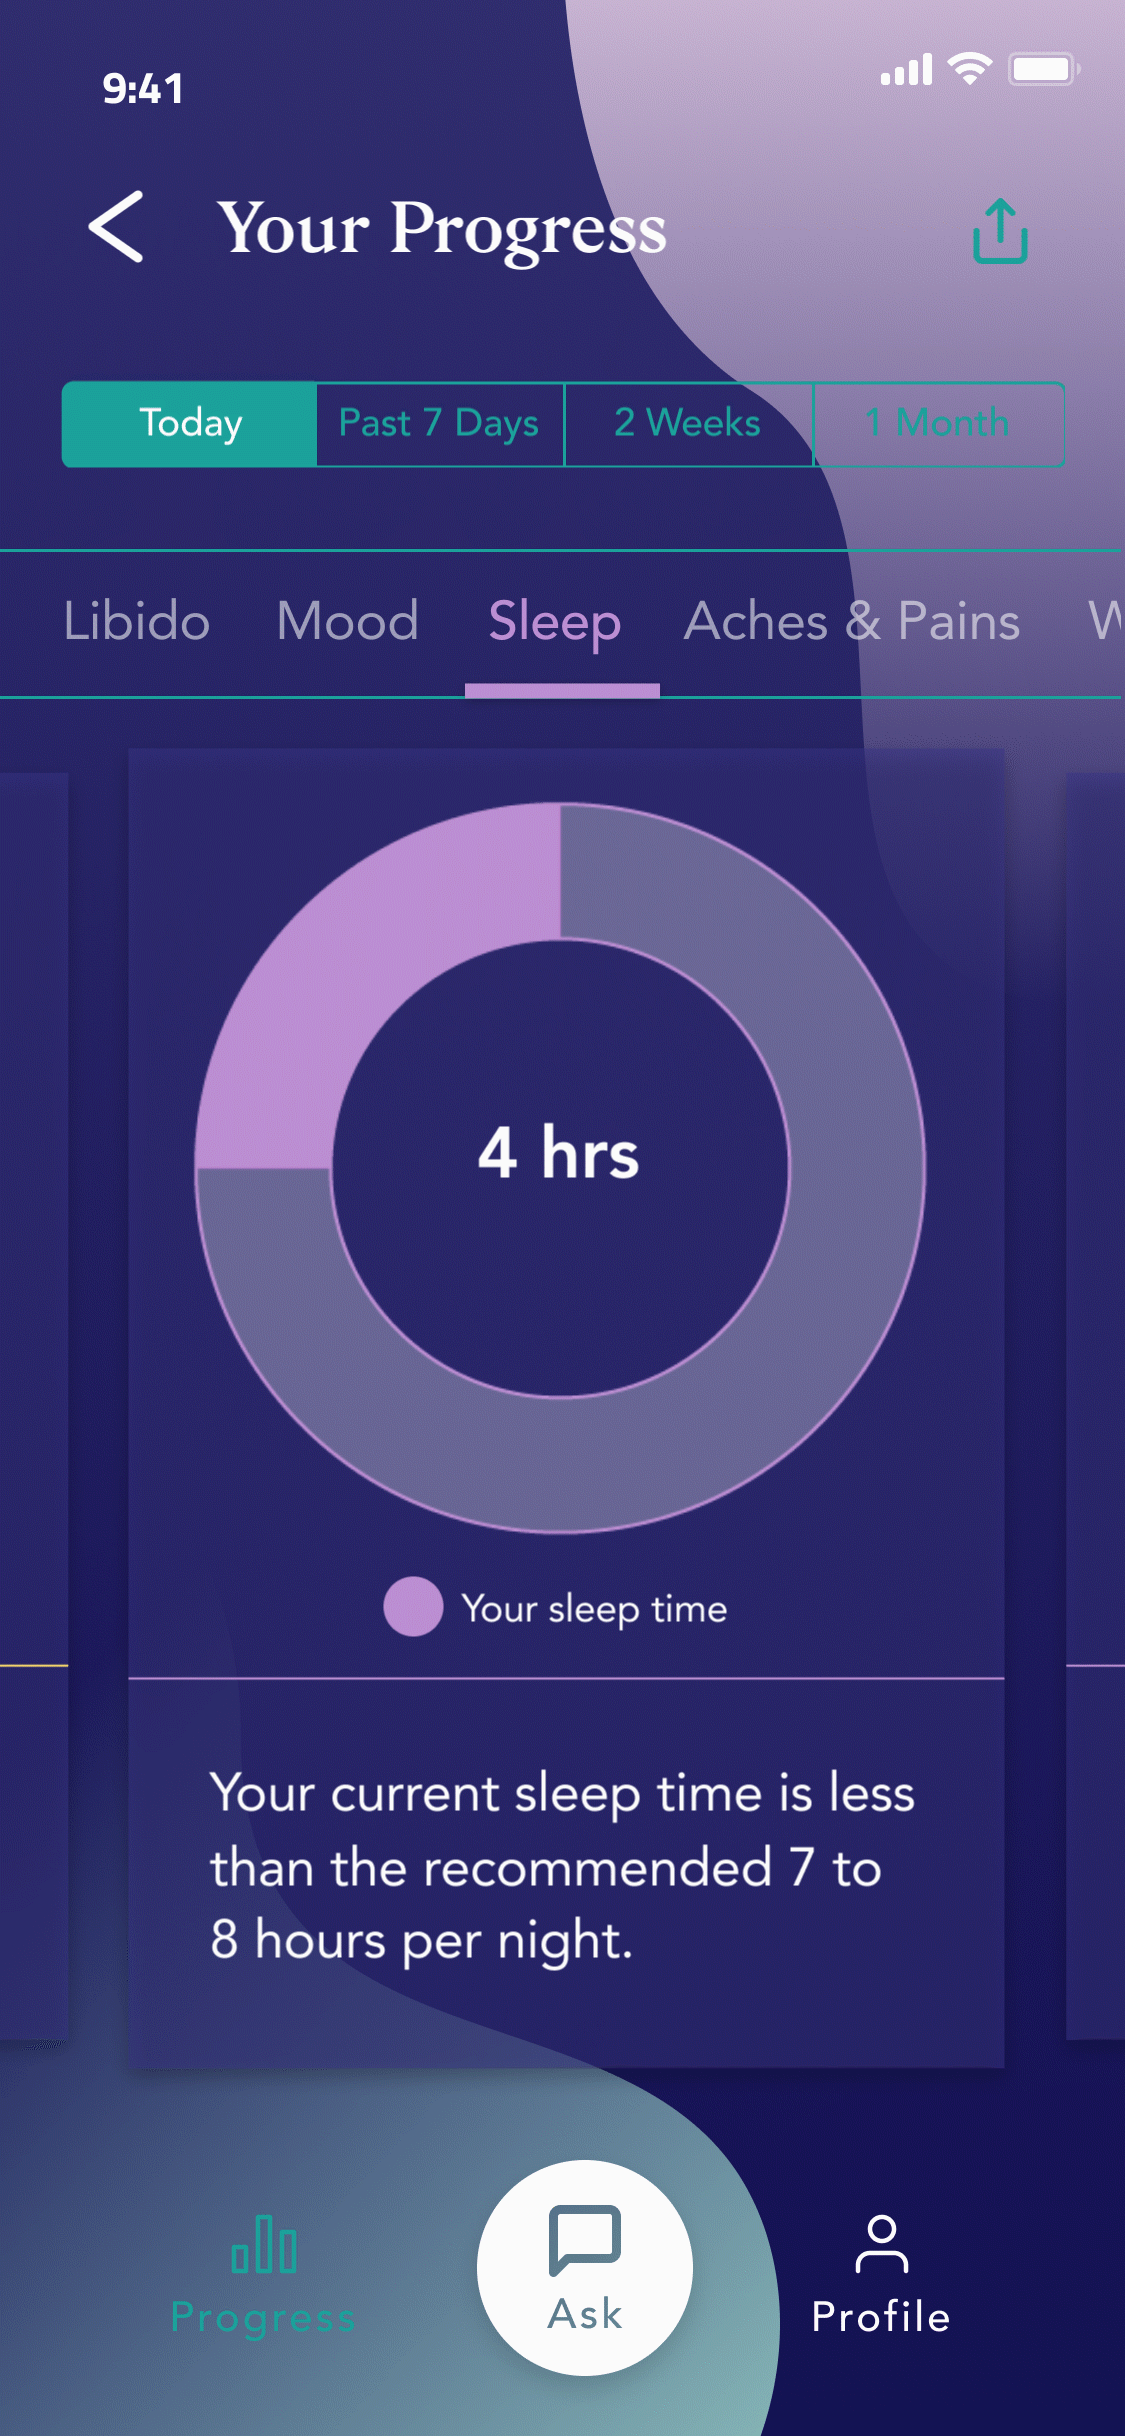 progress data for single day